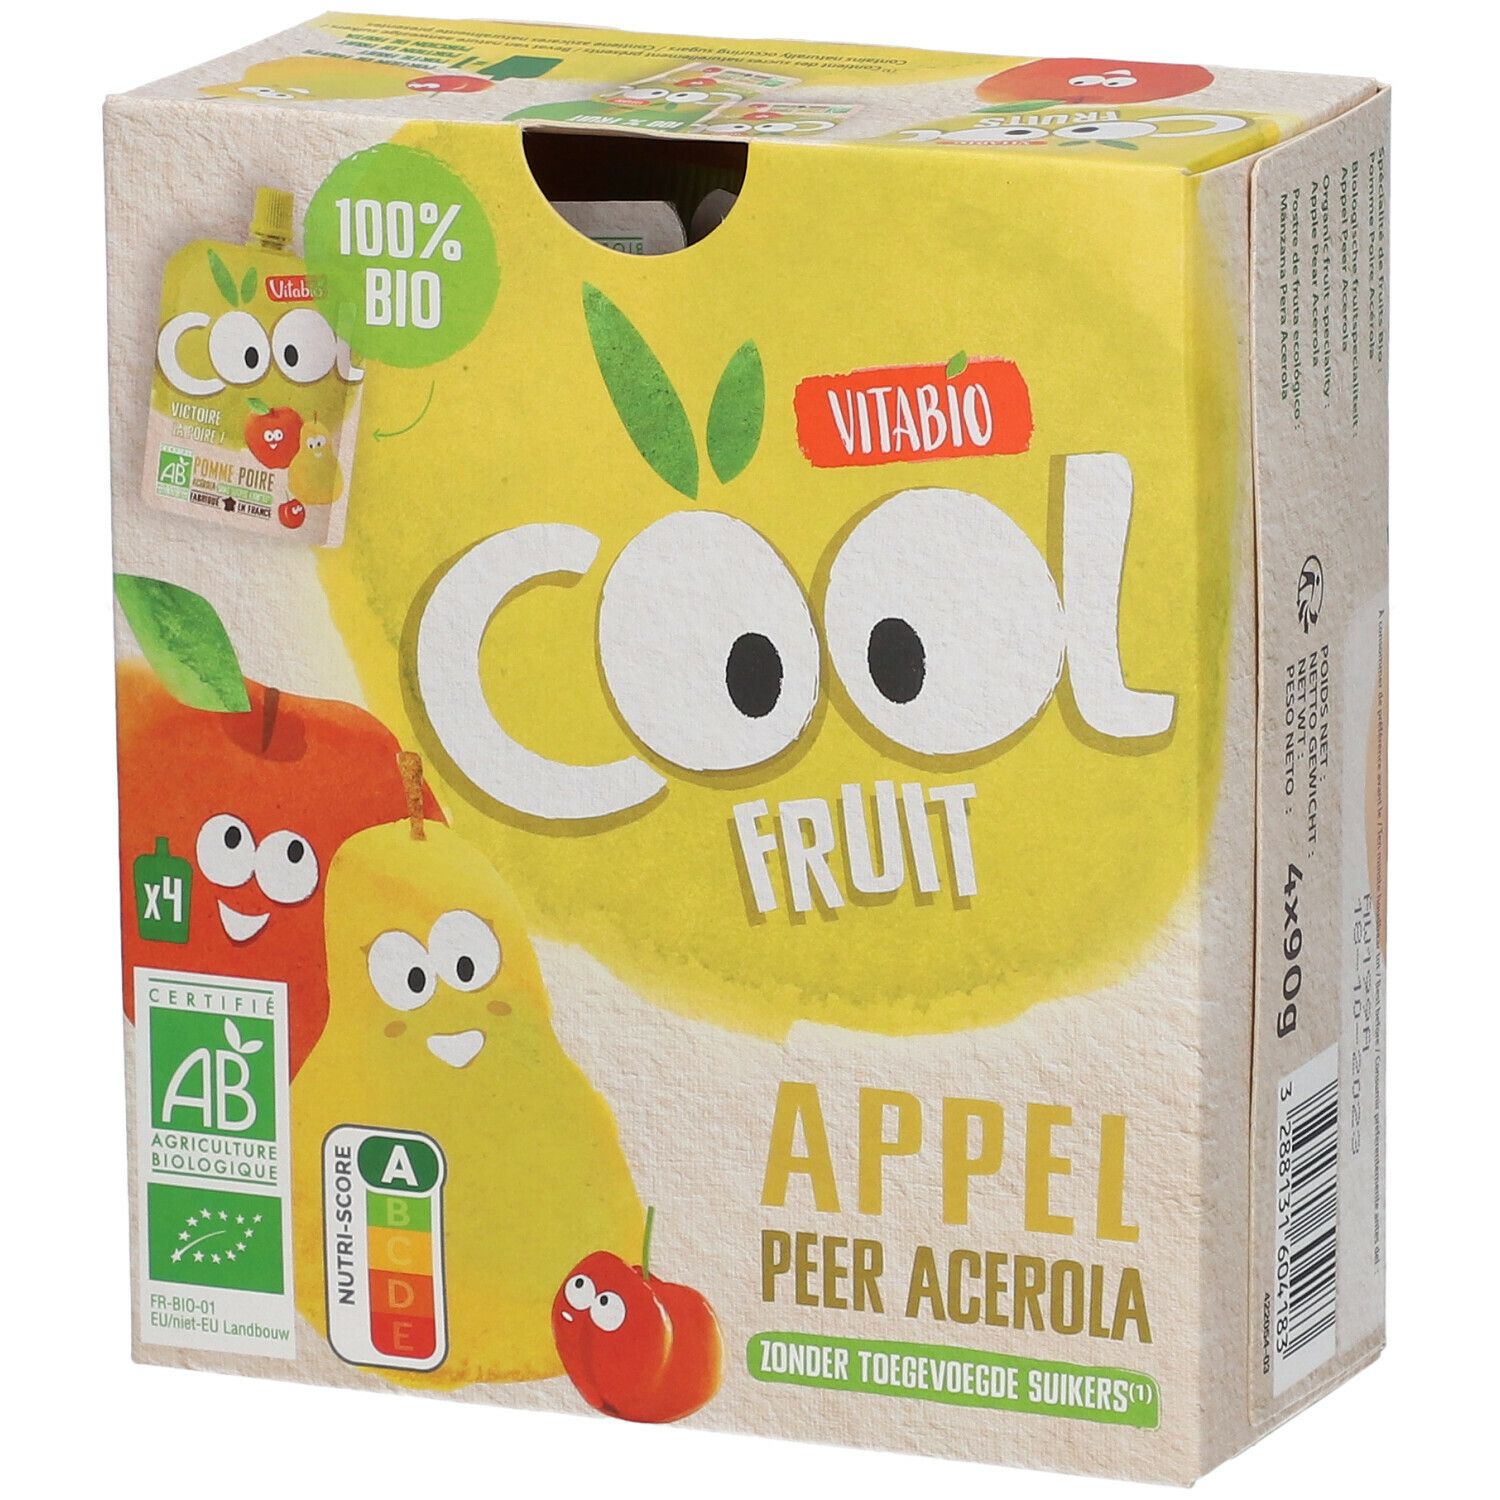 Vitabio Cool Fruits Appel - Peer Bio